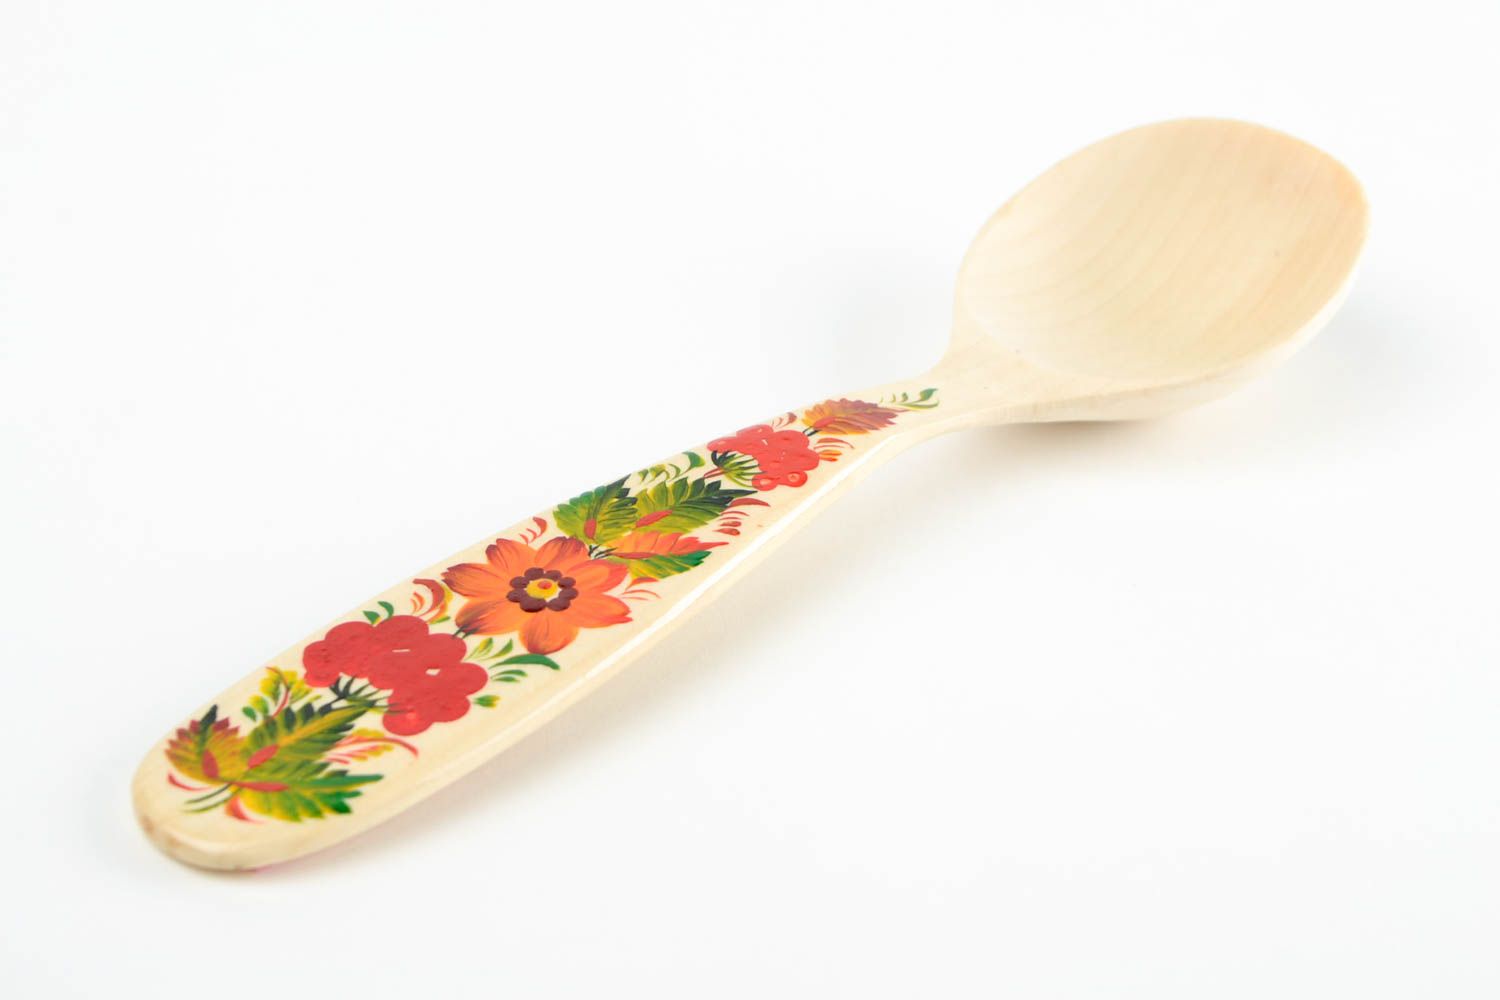 Handmade spoon designer spoon unusual kitchen cutlery decorative use only photo 4